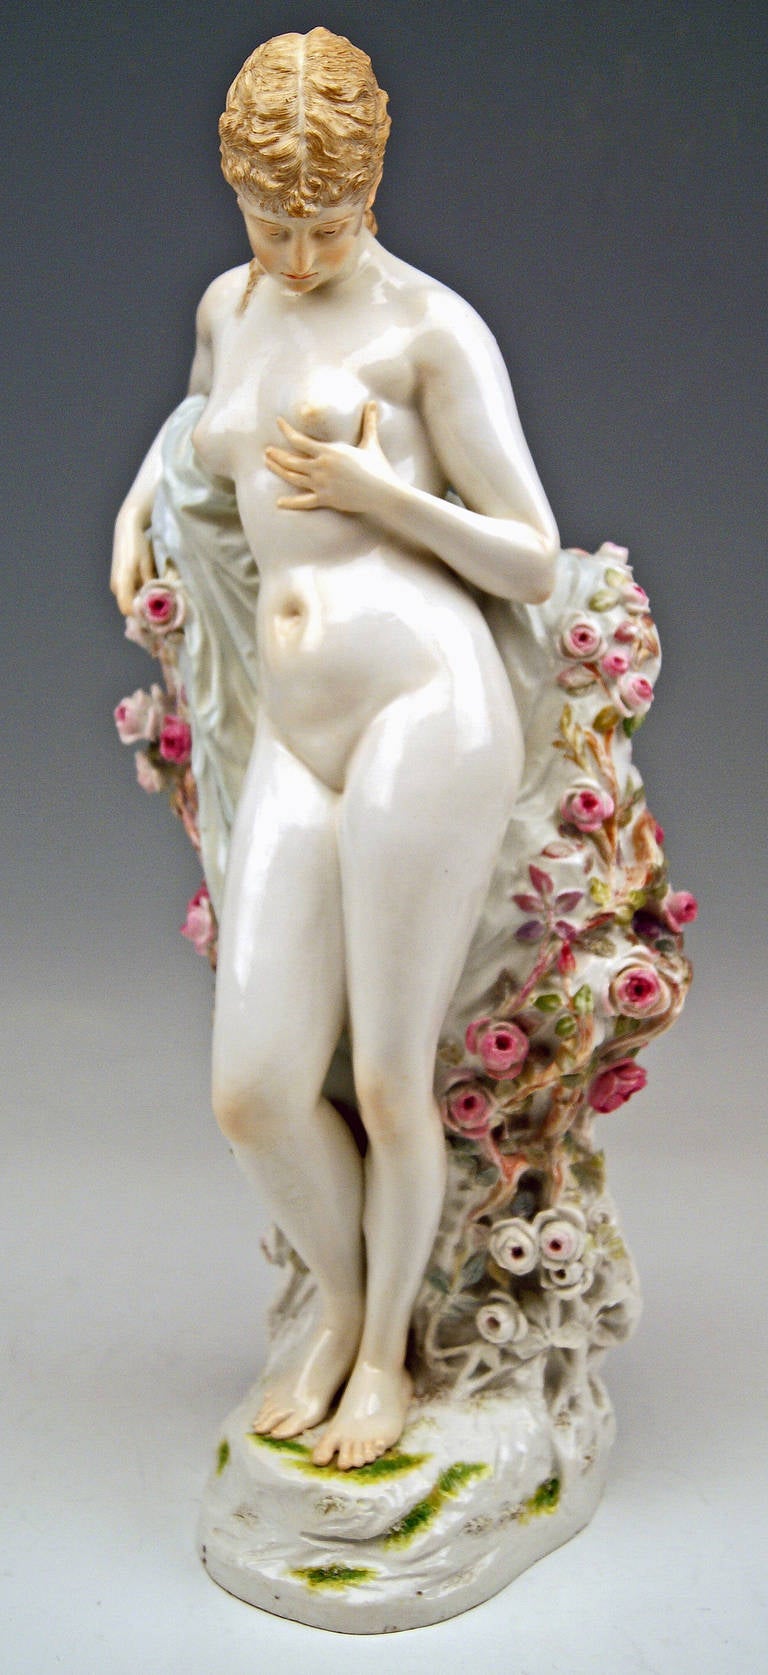 Meissen Art Nouveau Figurine:
Female Nude With Roses:  